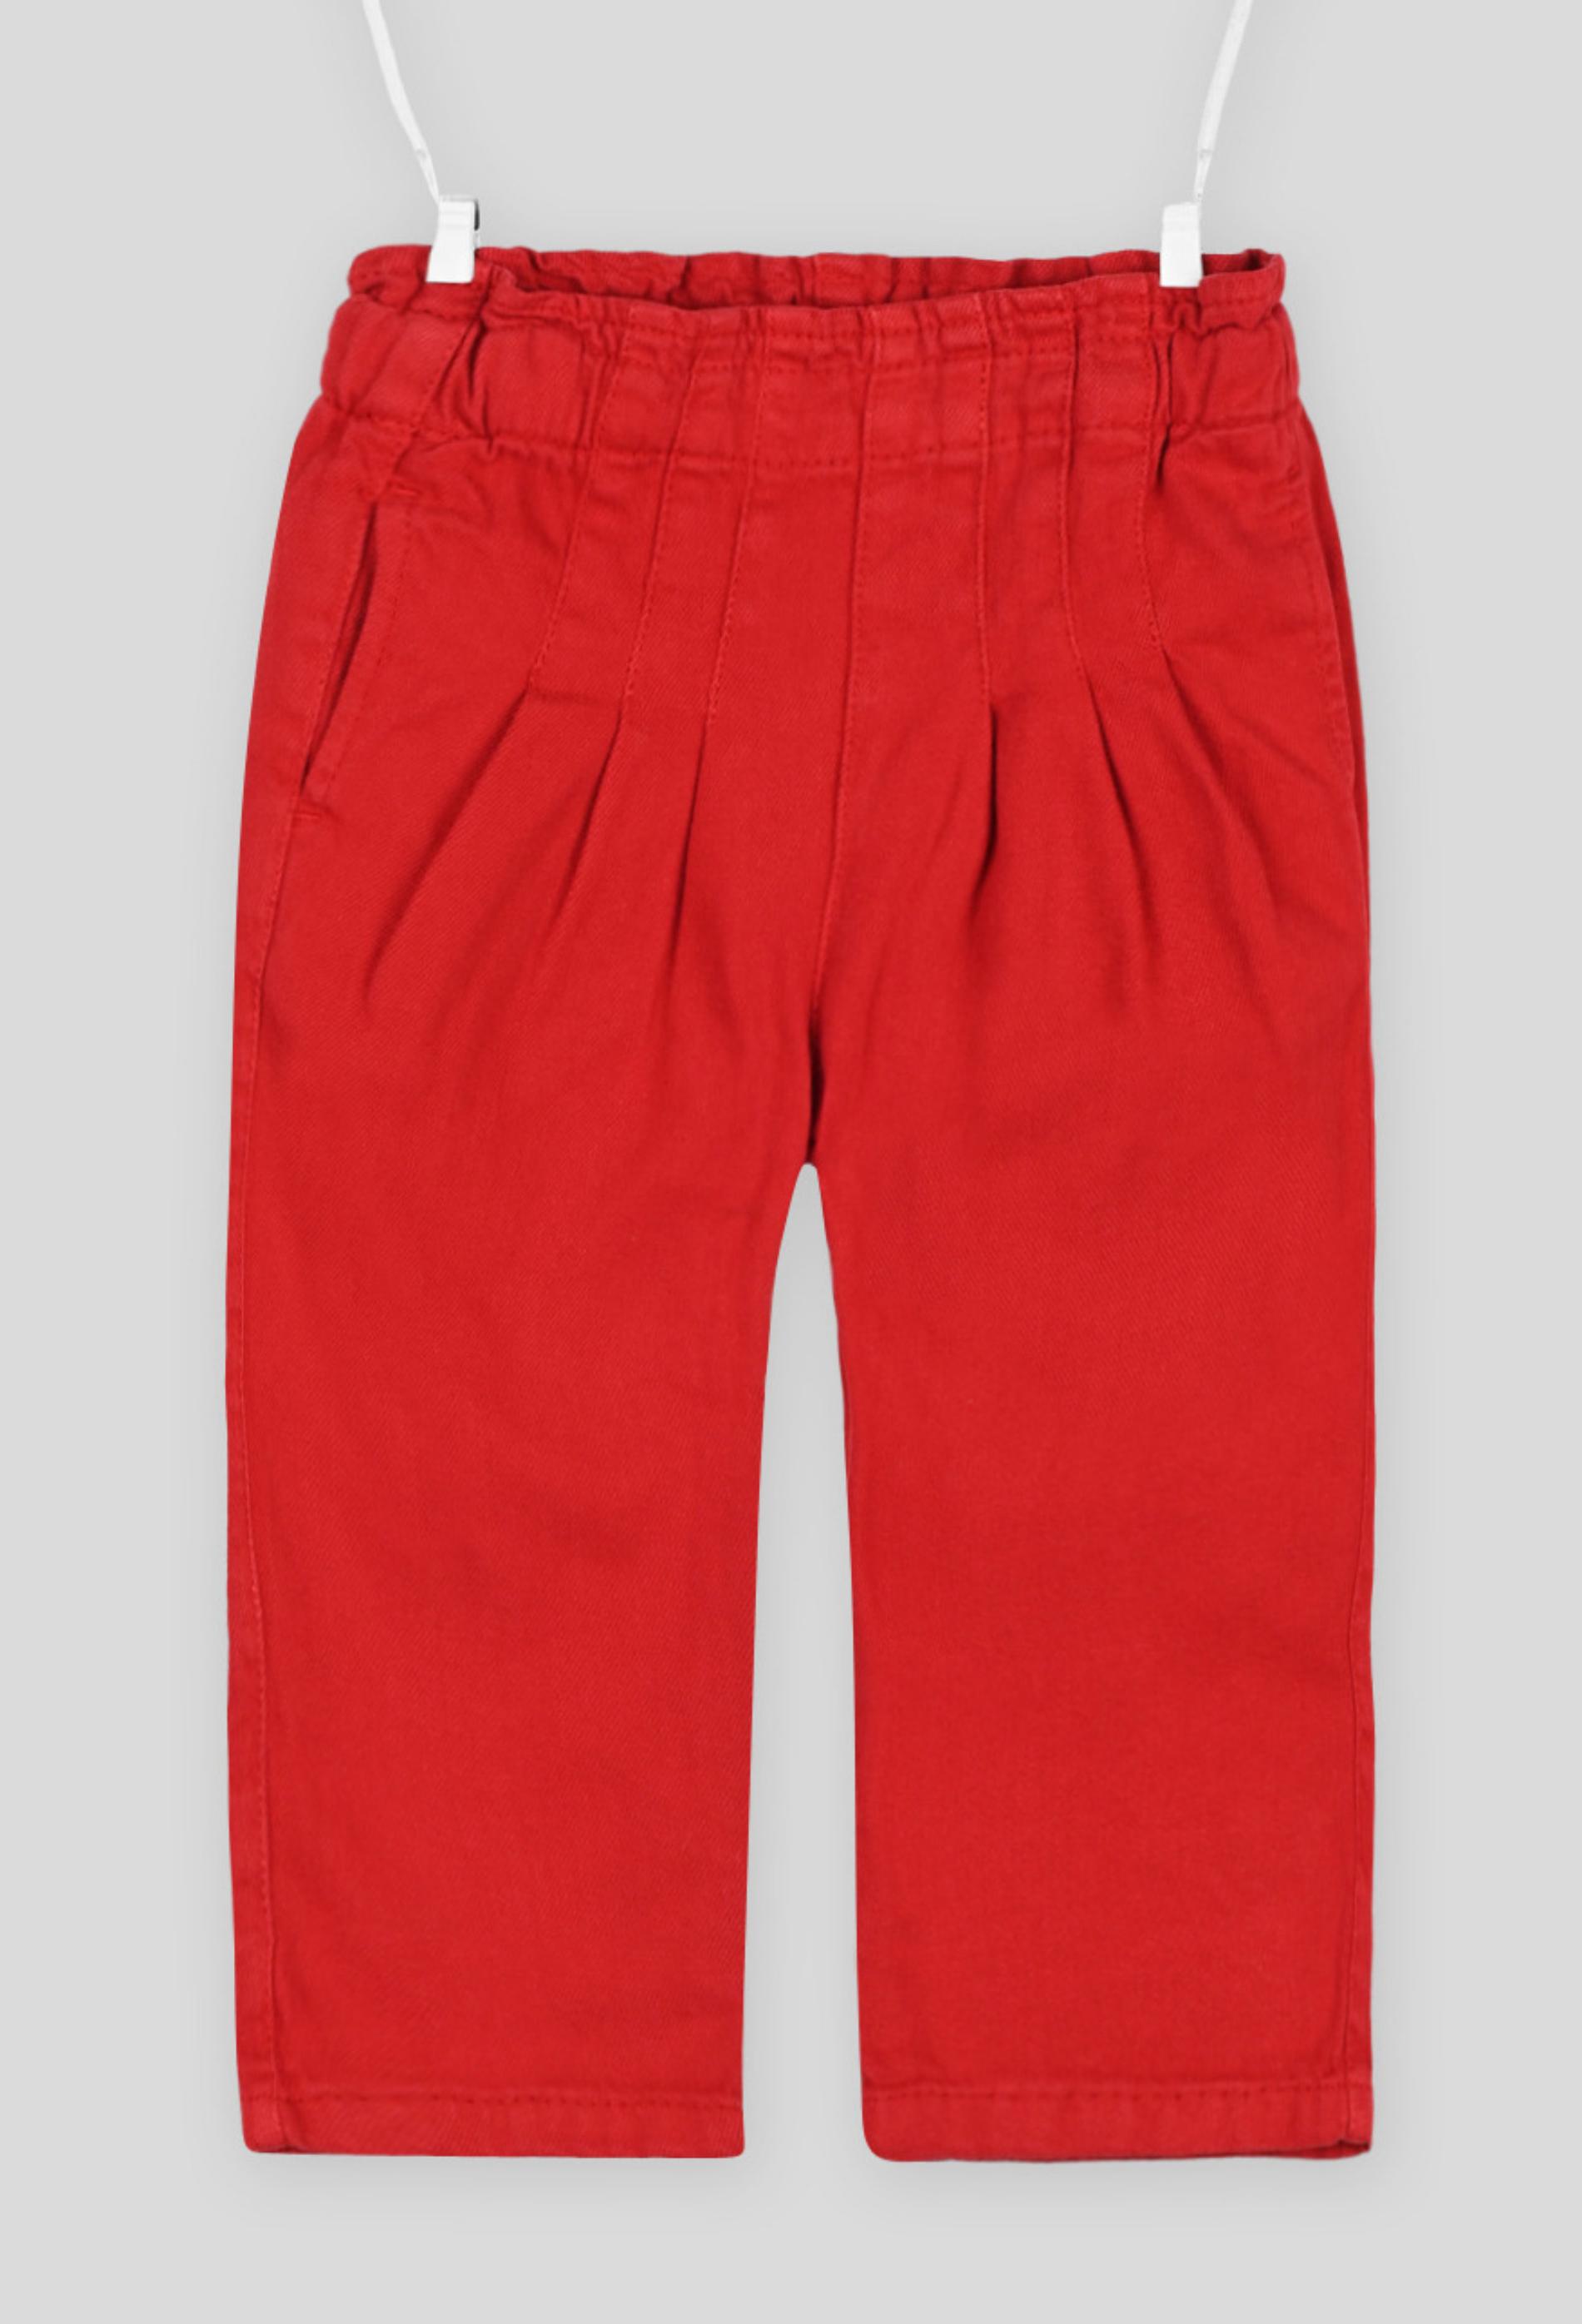 Pantalon taille haute 18 mois rouge